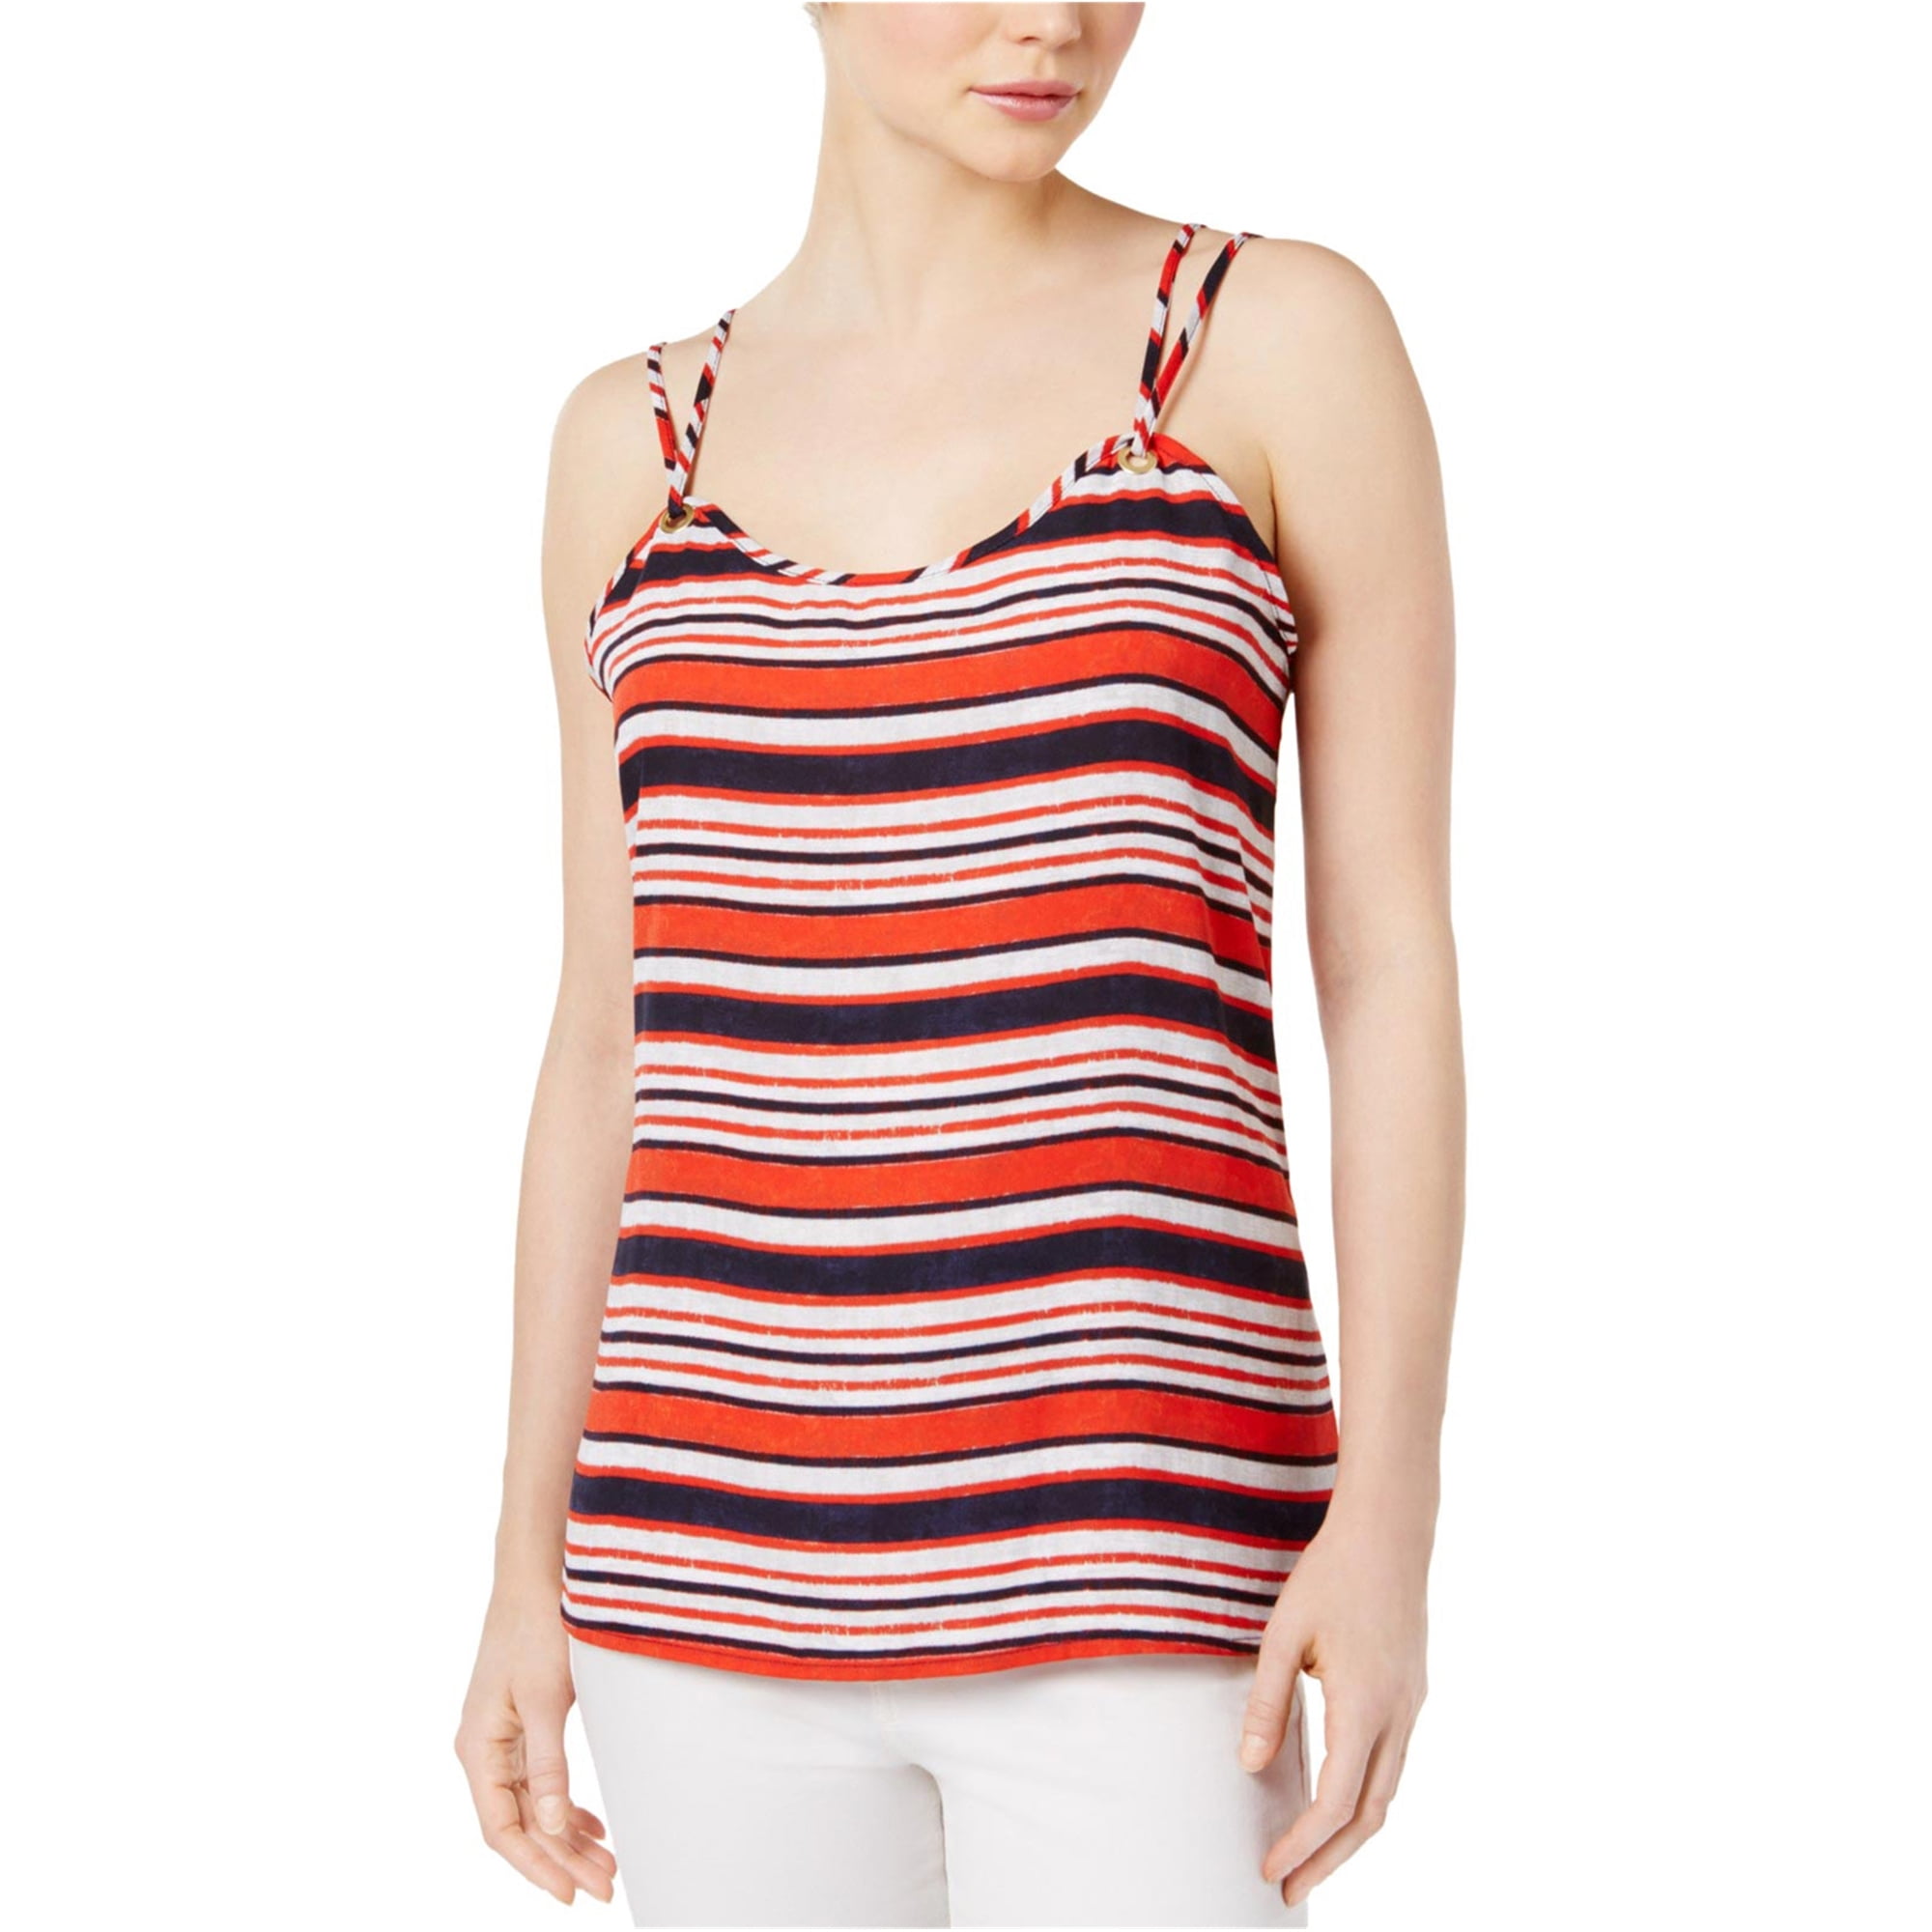 revolutie Absurd Geleerde Kensie Womens Sandbox Stripe Cami Tank Top, Orange, X-Small - Walmart.com